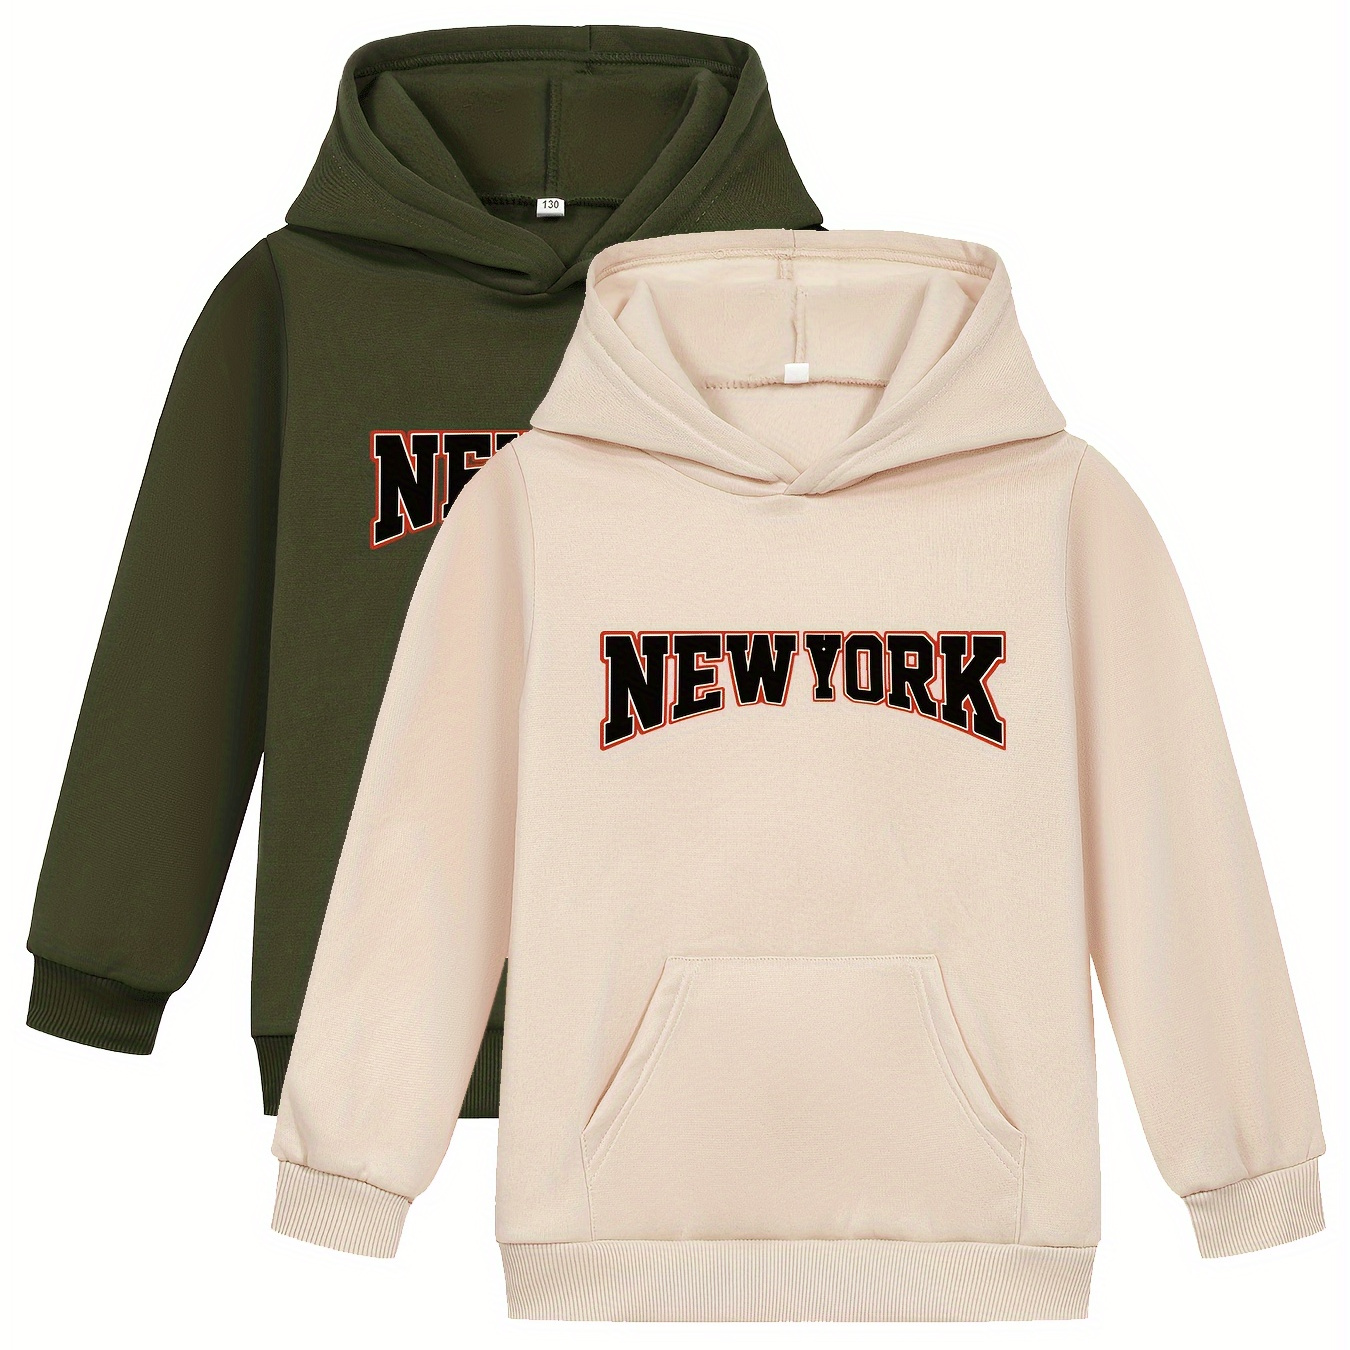 

2pcs Boys New York Letter Print Casual Pullover Long Sleeve Hoodies With Kangaroo Pocket, Boys Sweatshirt For Winter Fall, Kids Hoodie Tops Outdoor